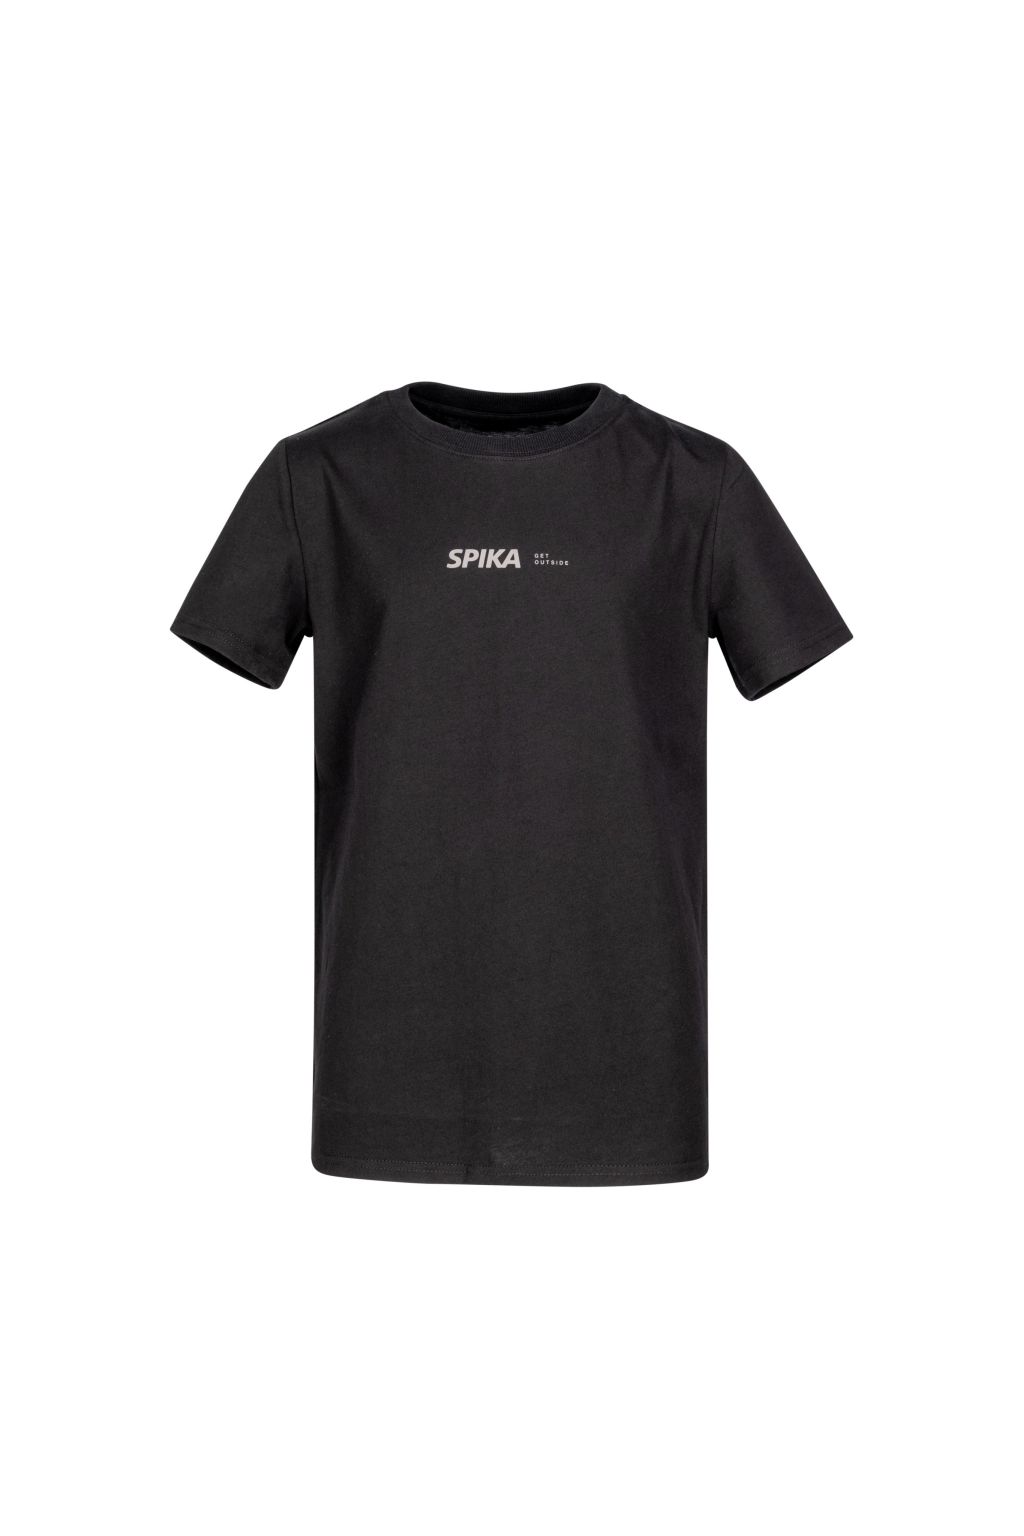 Spika Go Advance Kids T-Shirt - Black - 2 - Mansfield Hunting & Fishing - Products to prepare for Corona Virus